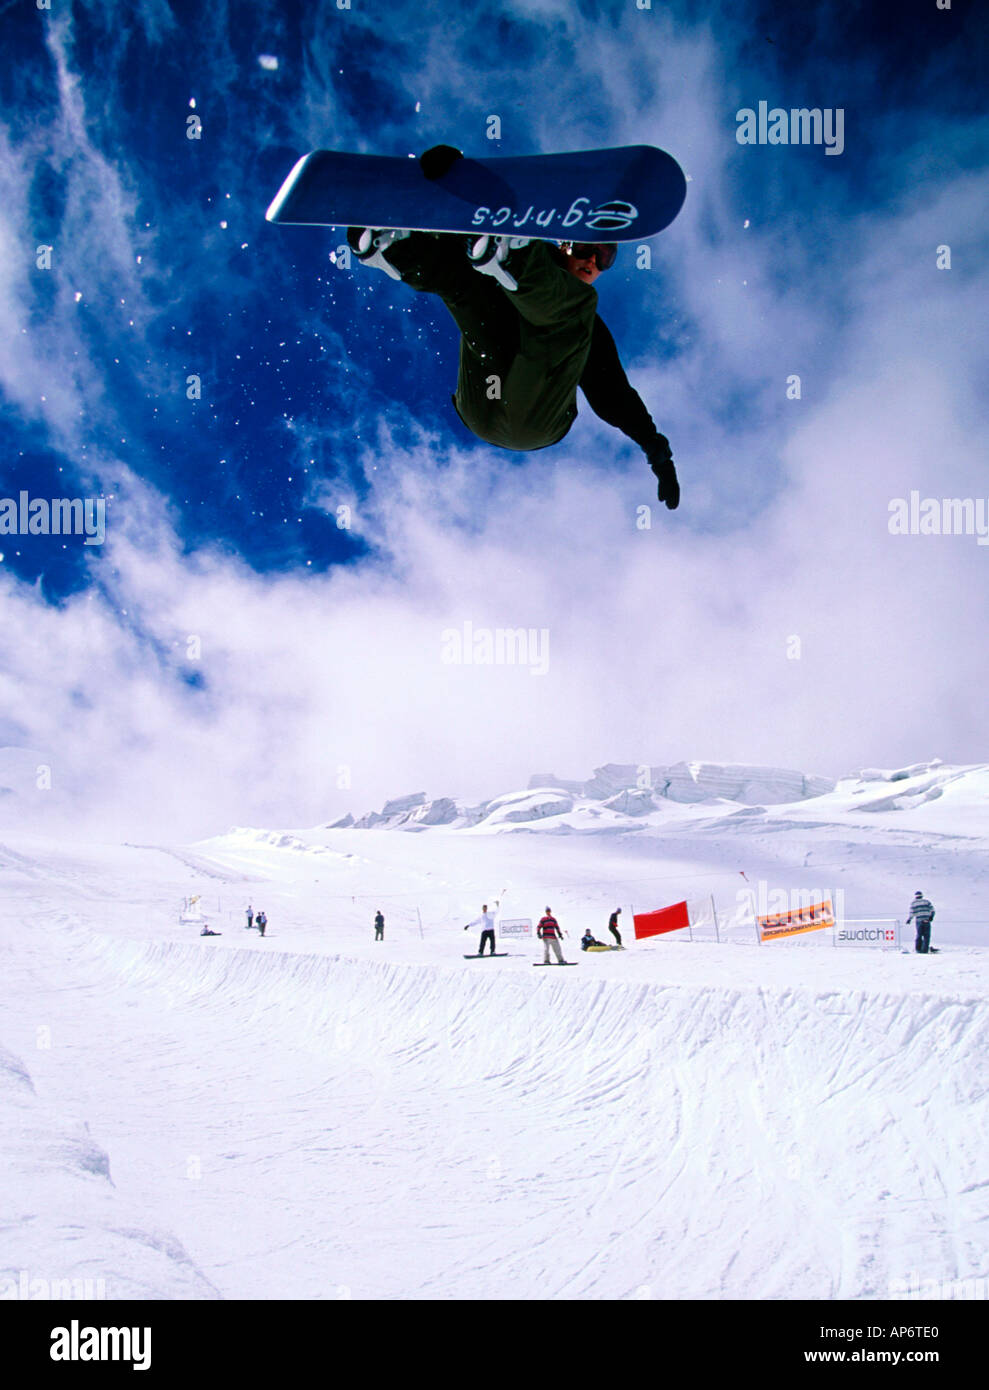 MARKU KOSKI SNOWBOARDING IN SAAS FEE ICE RIPPER Stock Photo